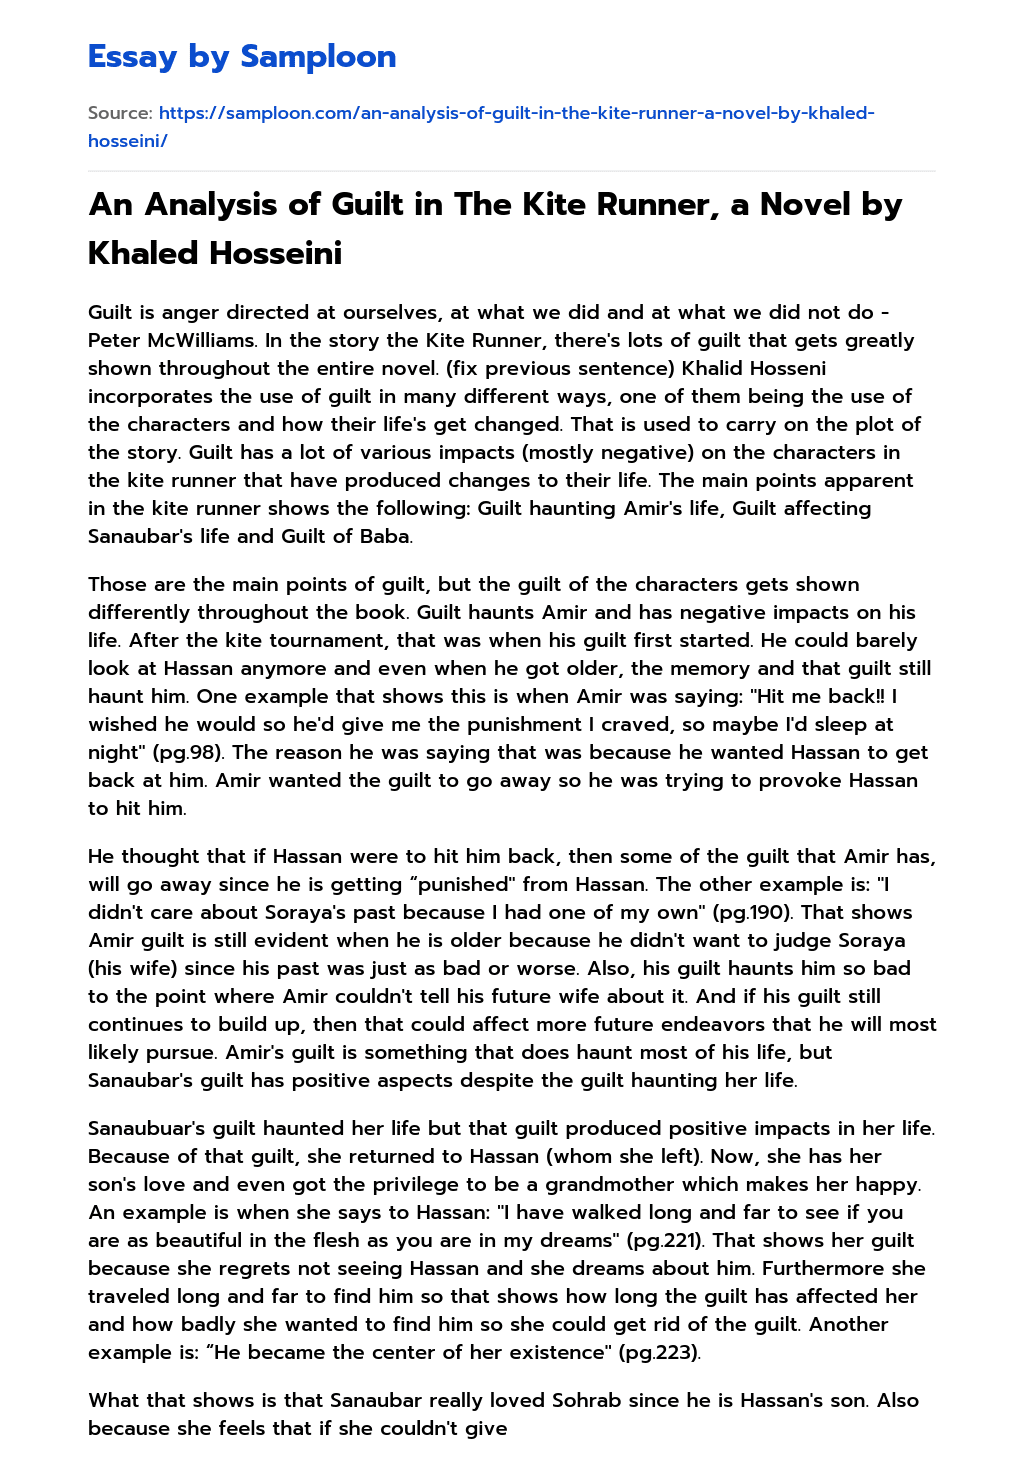 An Analysis of Guilt in The Kite Runner, a Novel by Khaled Hosseini essay